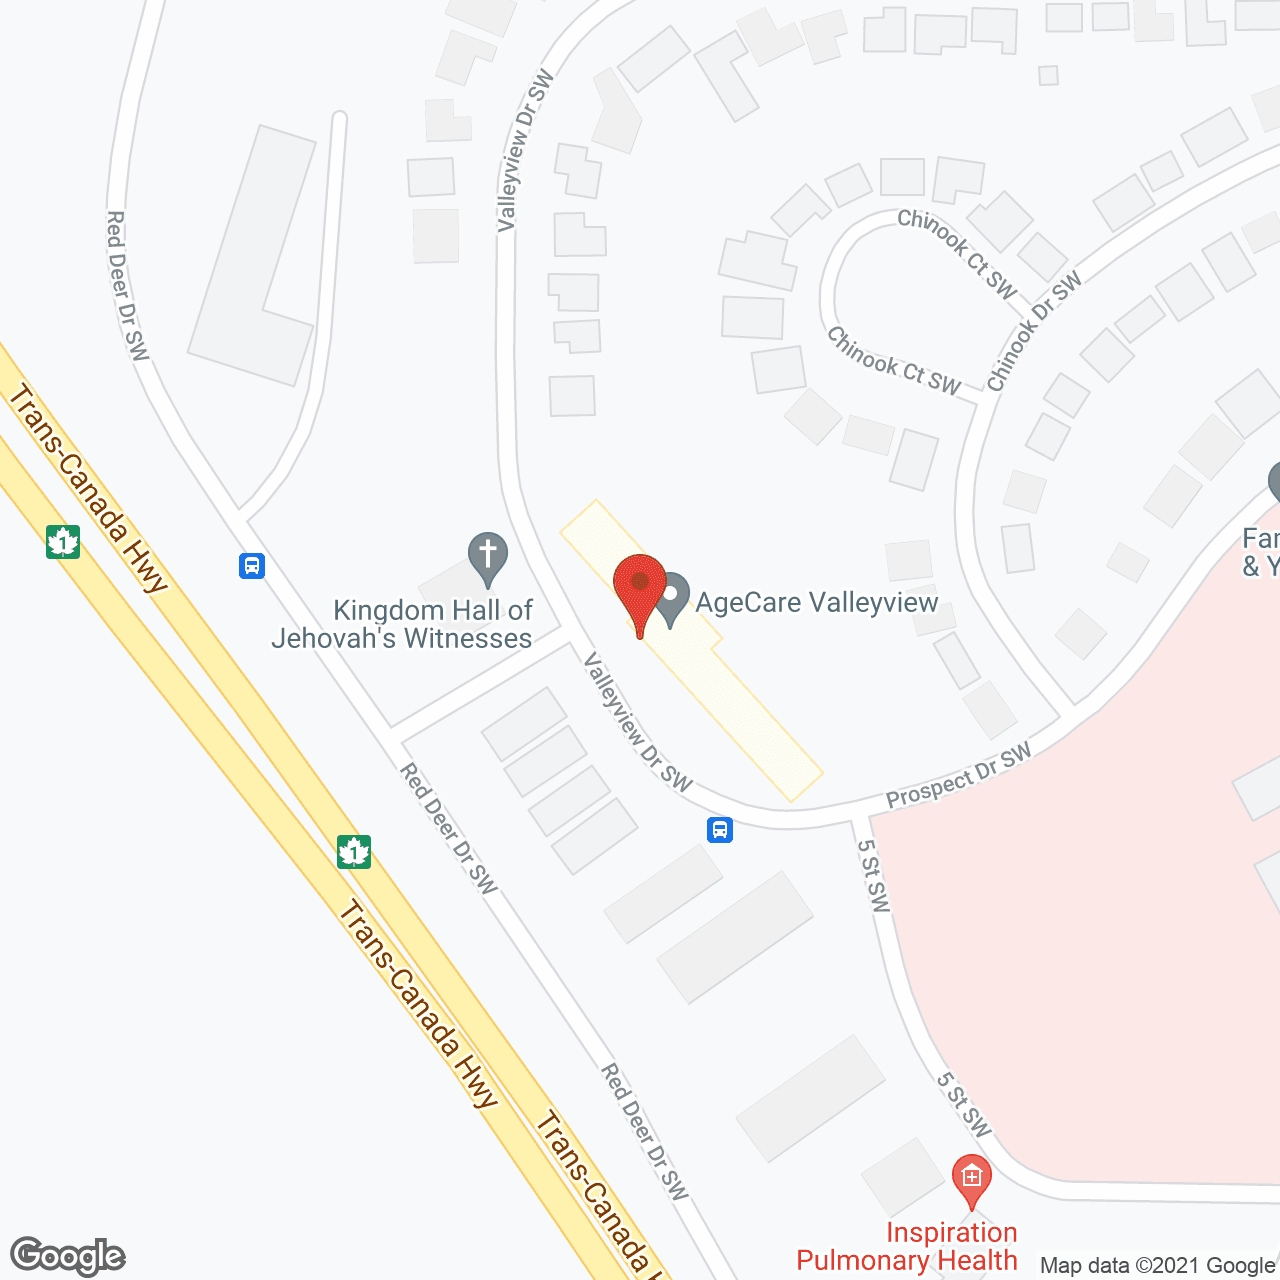 AgeCare Valleyview in google map